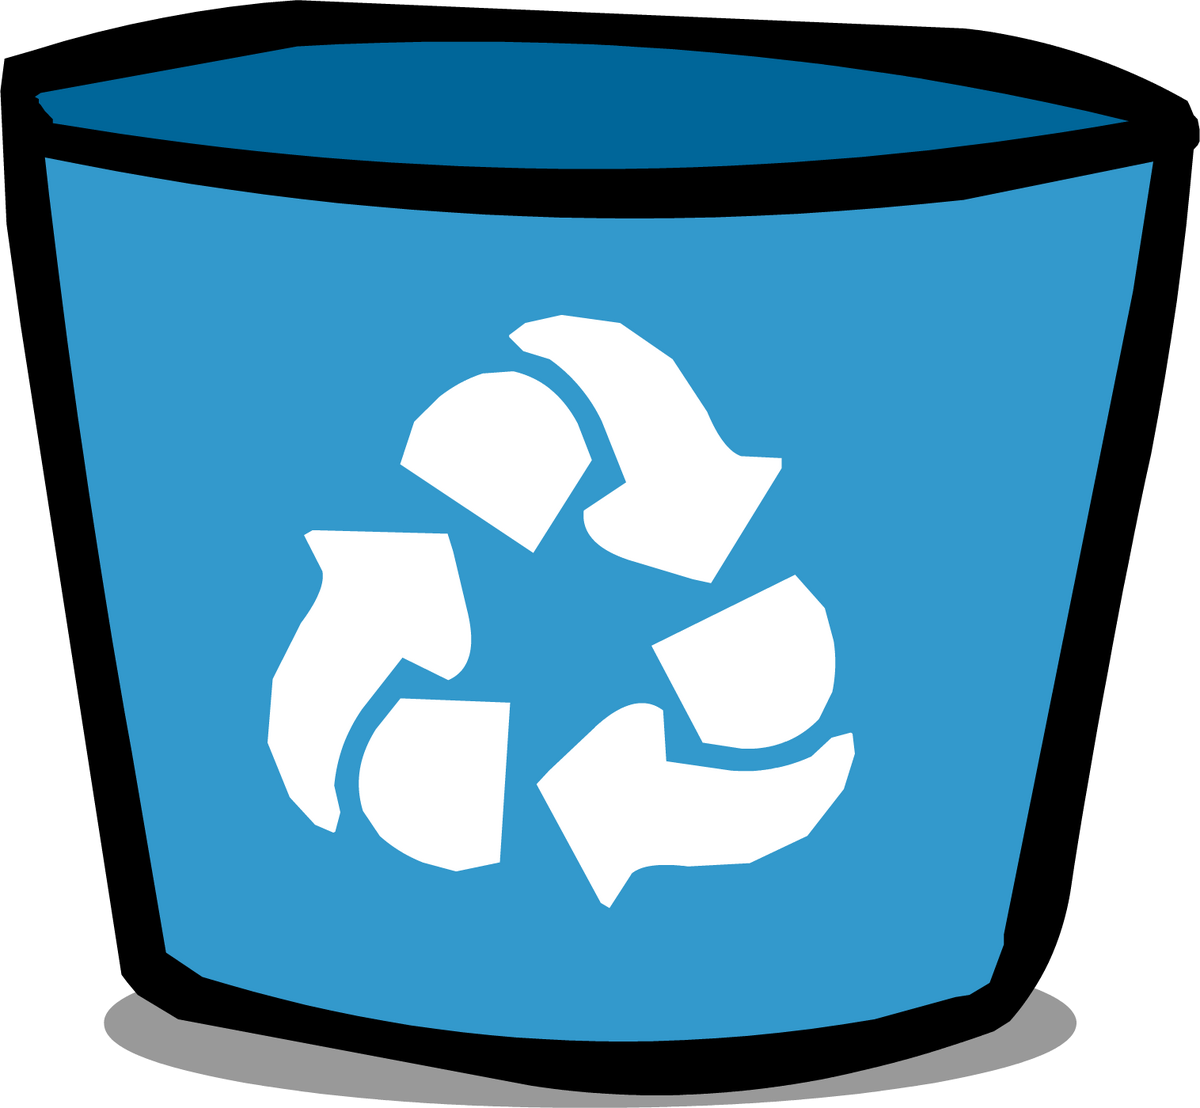 Recycle bin PNG Image | Recycle bin icon, Recycling bins, Trash can